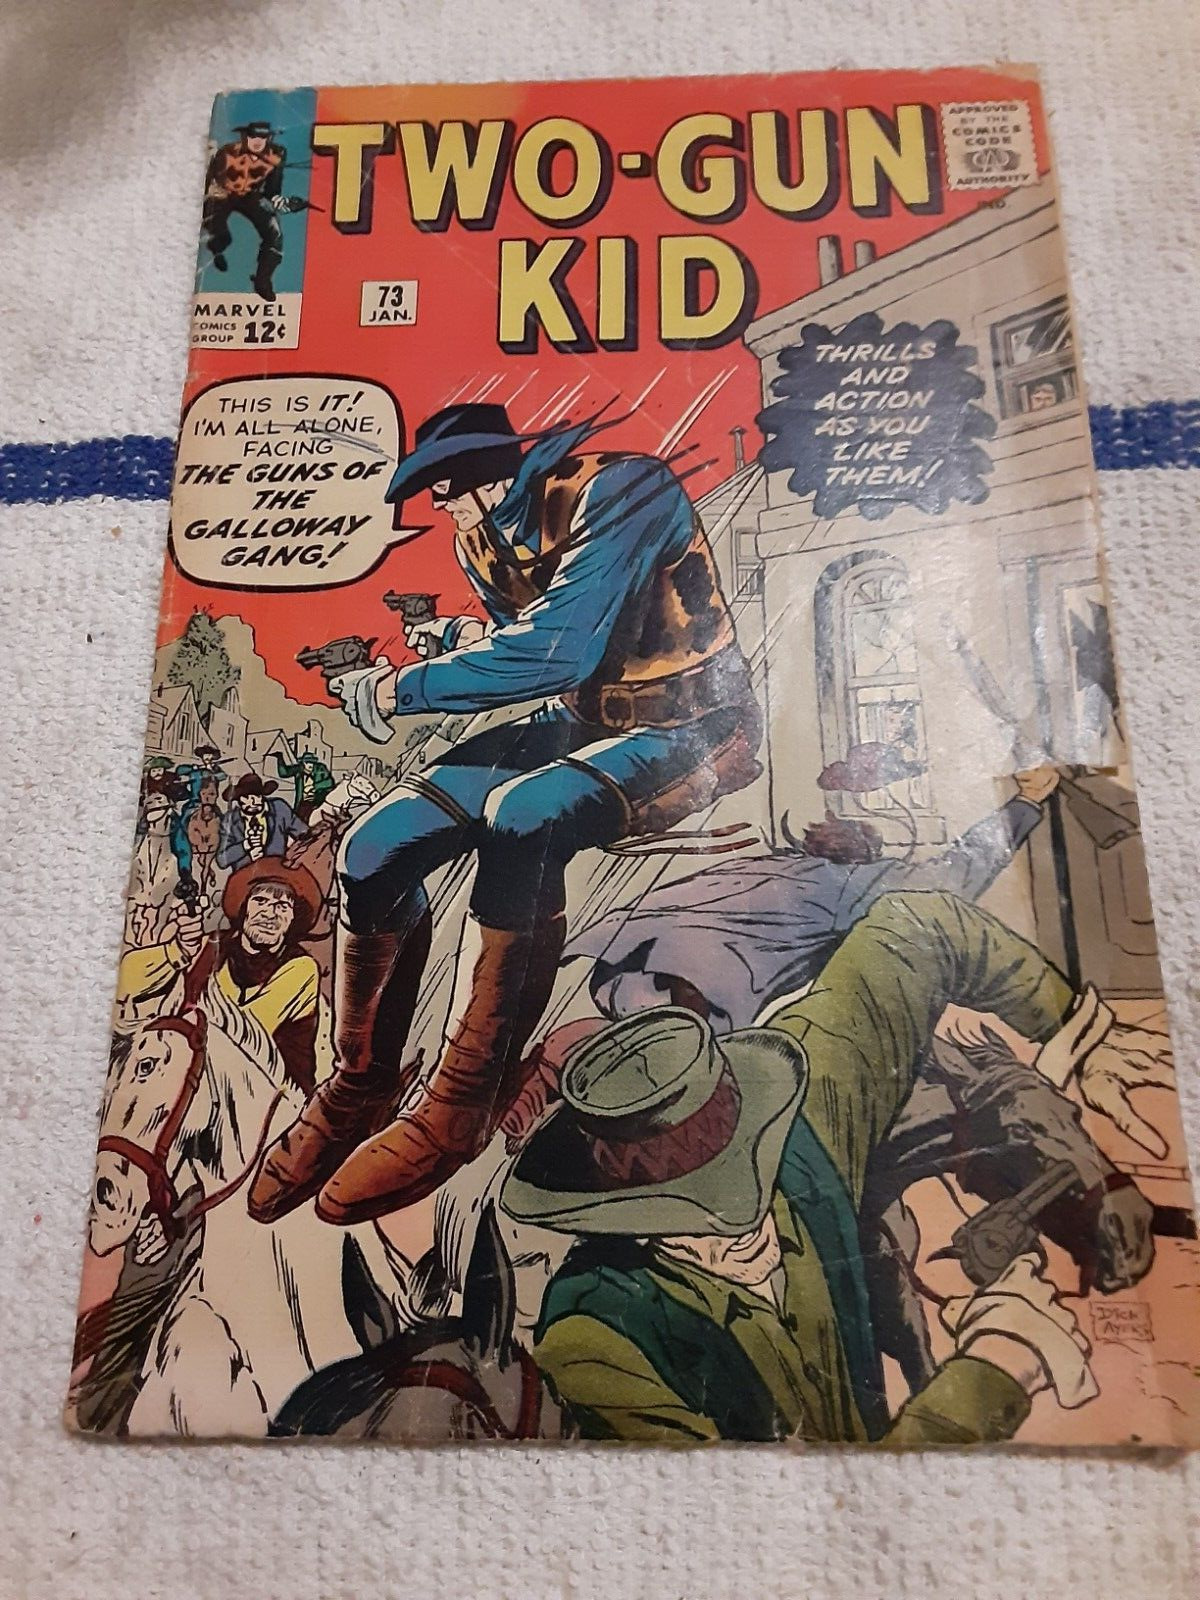 Two-Gun Kid #73 (Marvel Comics)